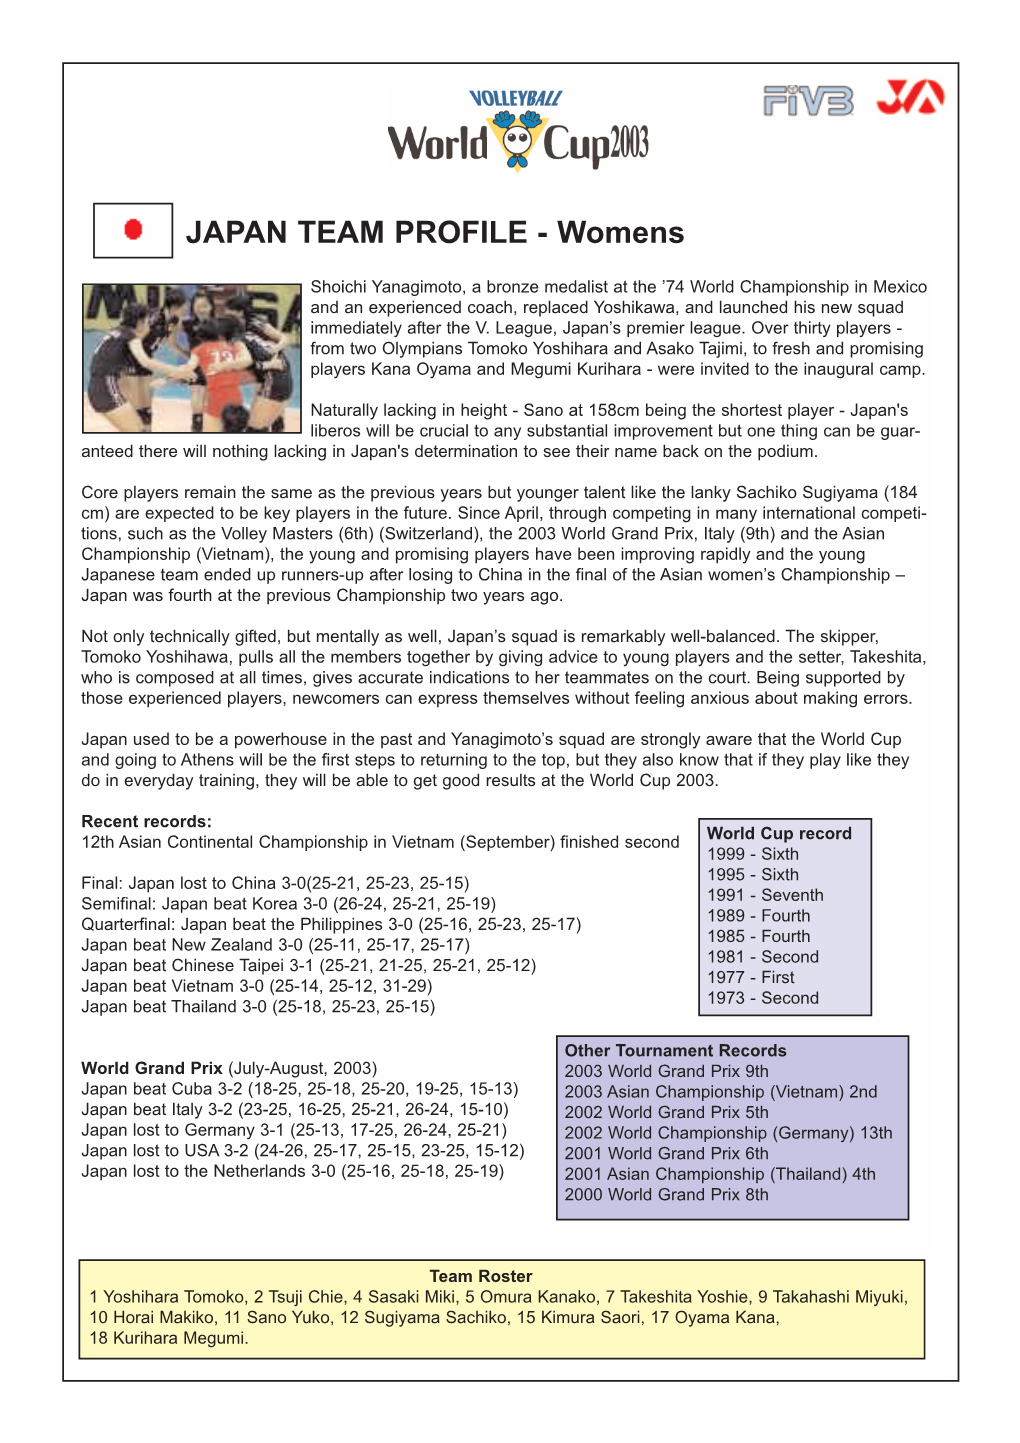 Japan Profile.Qxd